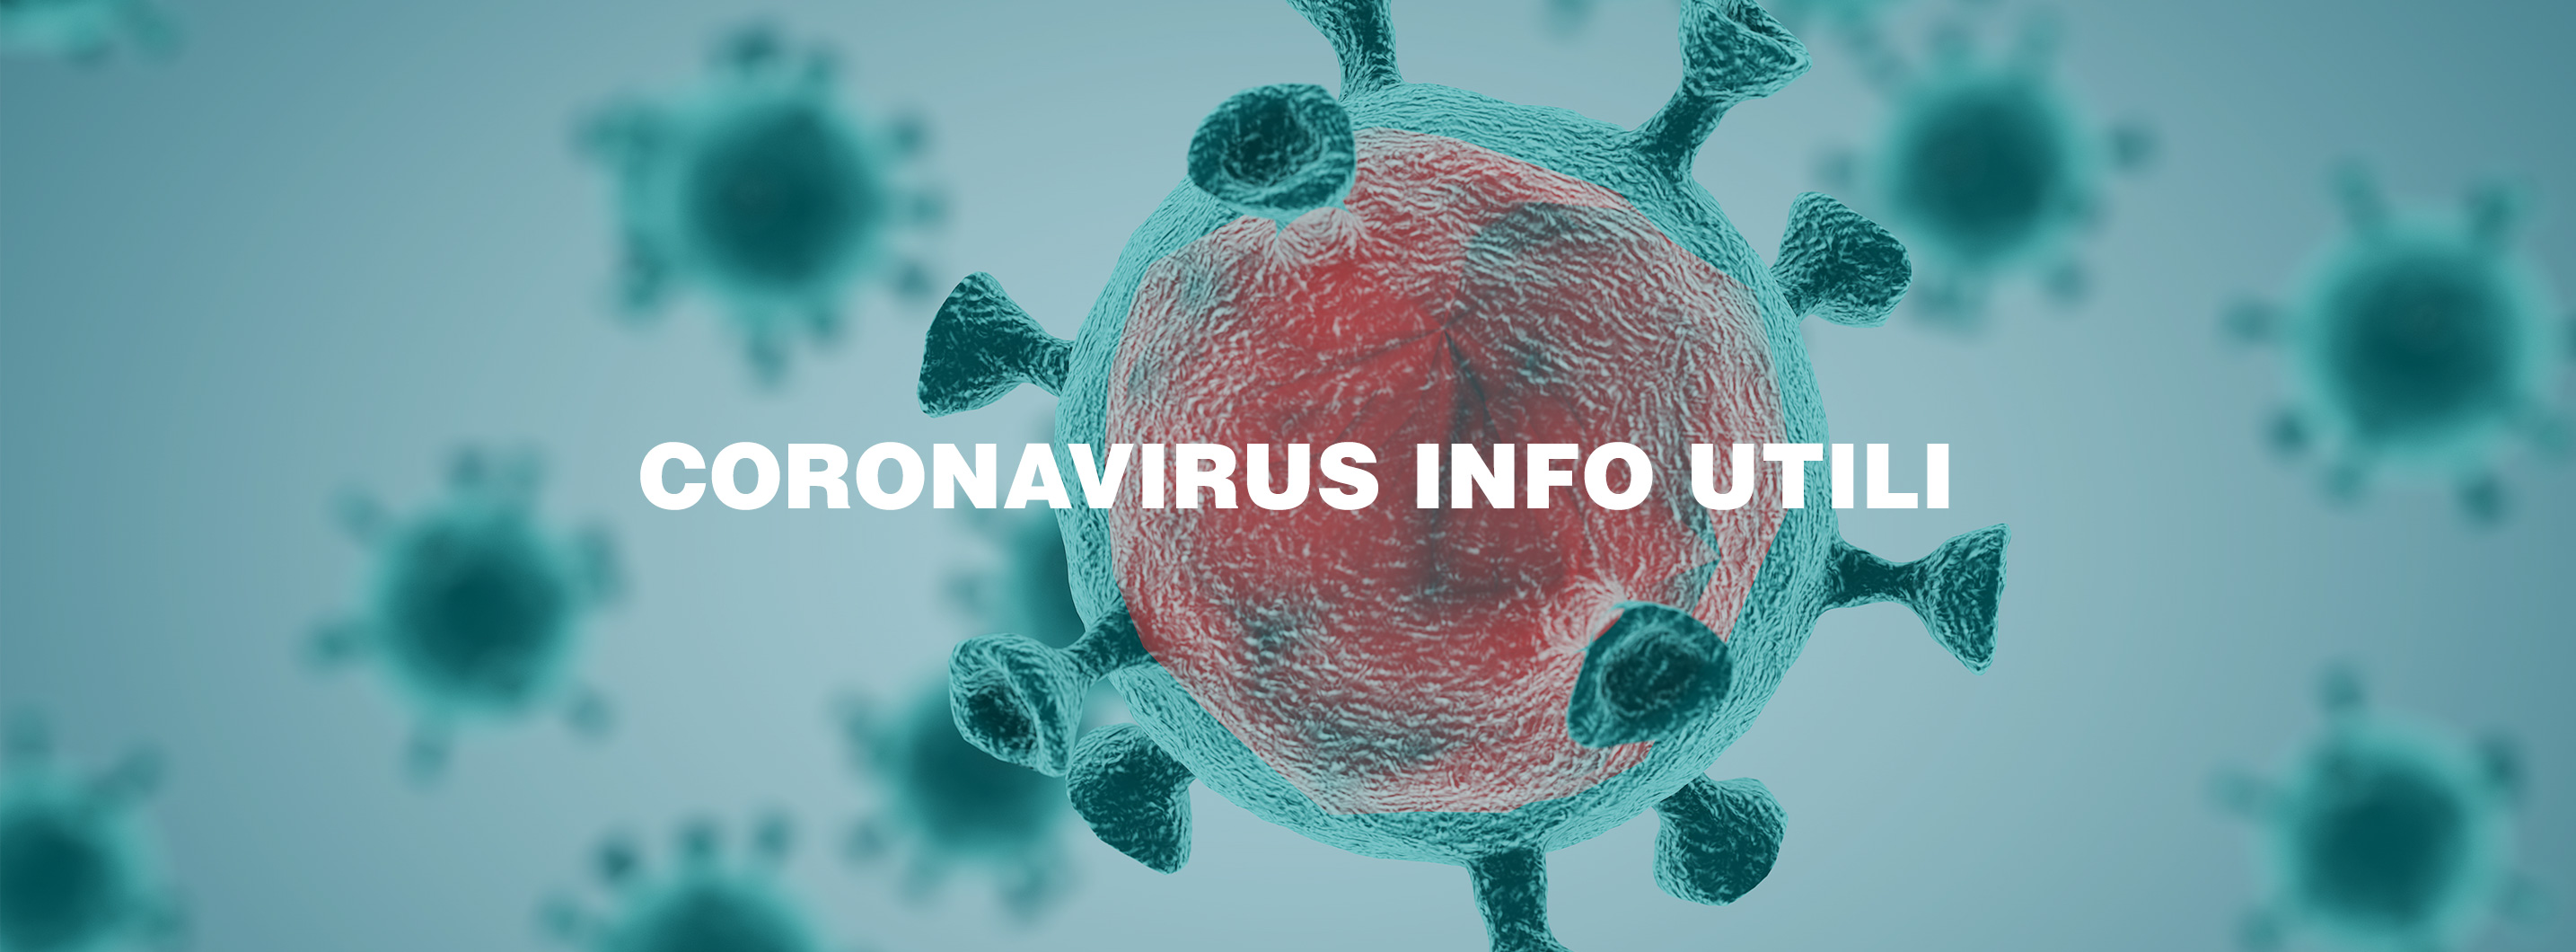 Coronavirus-speciale